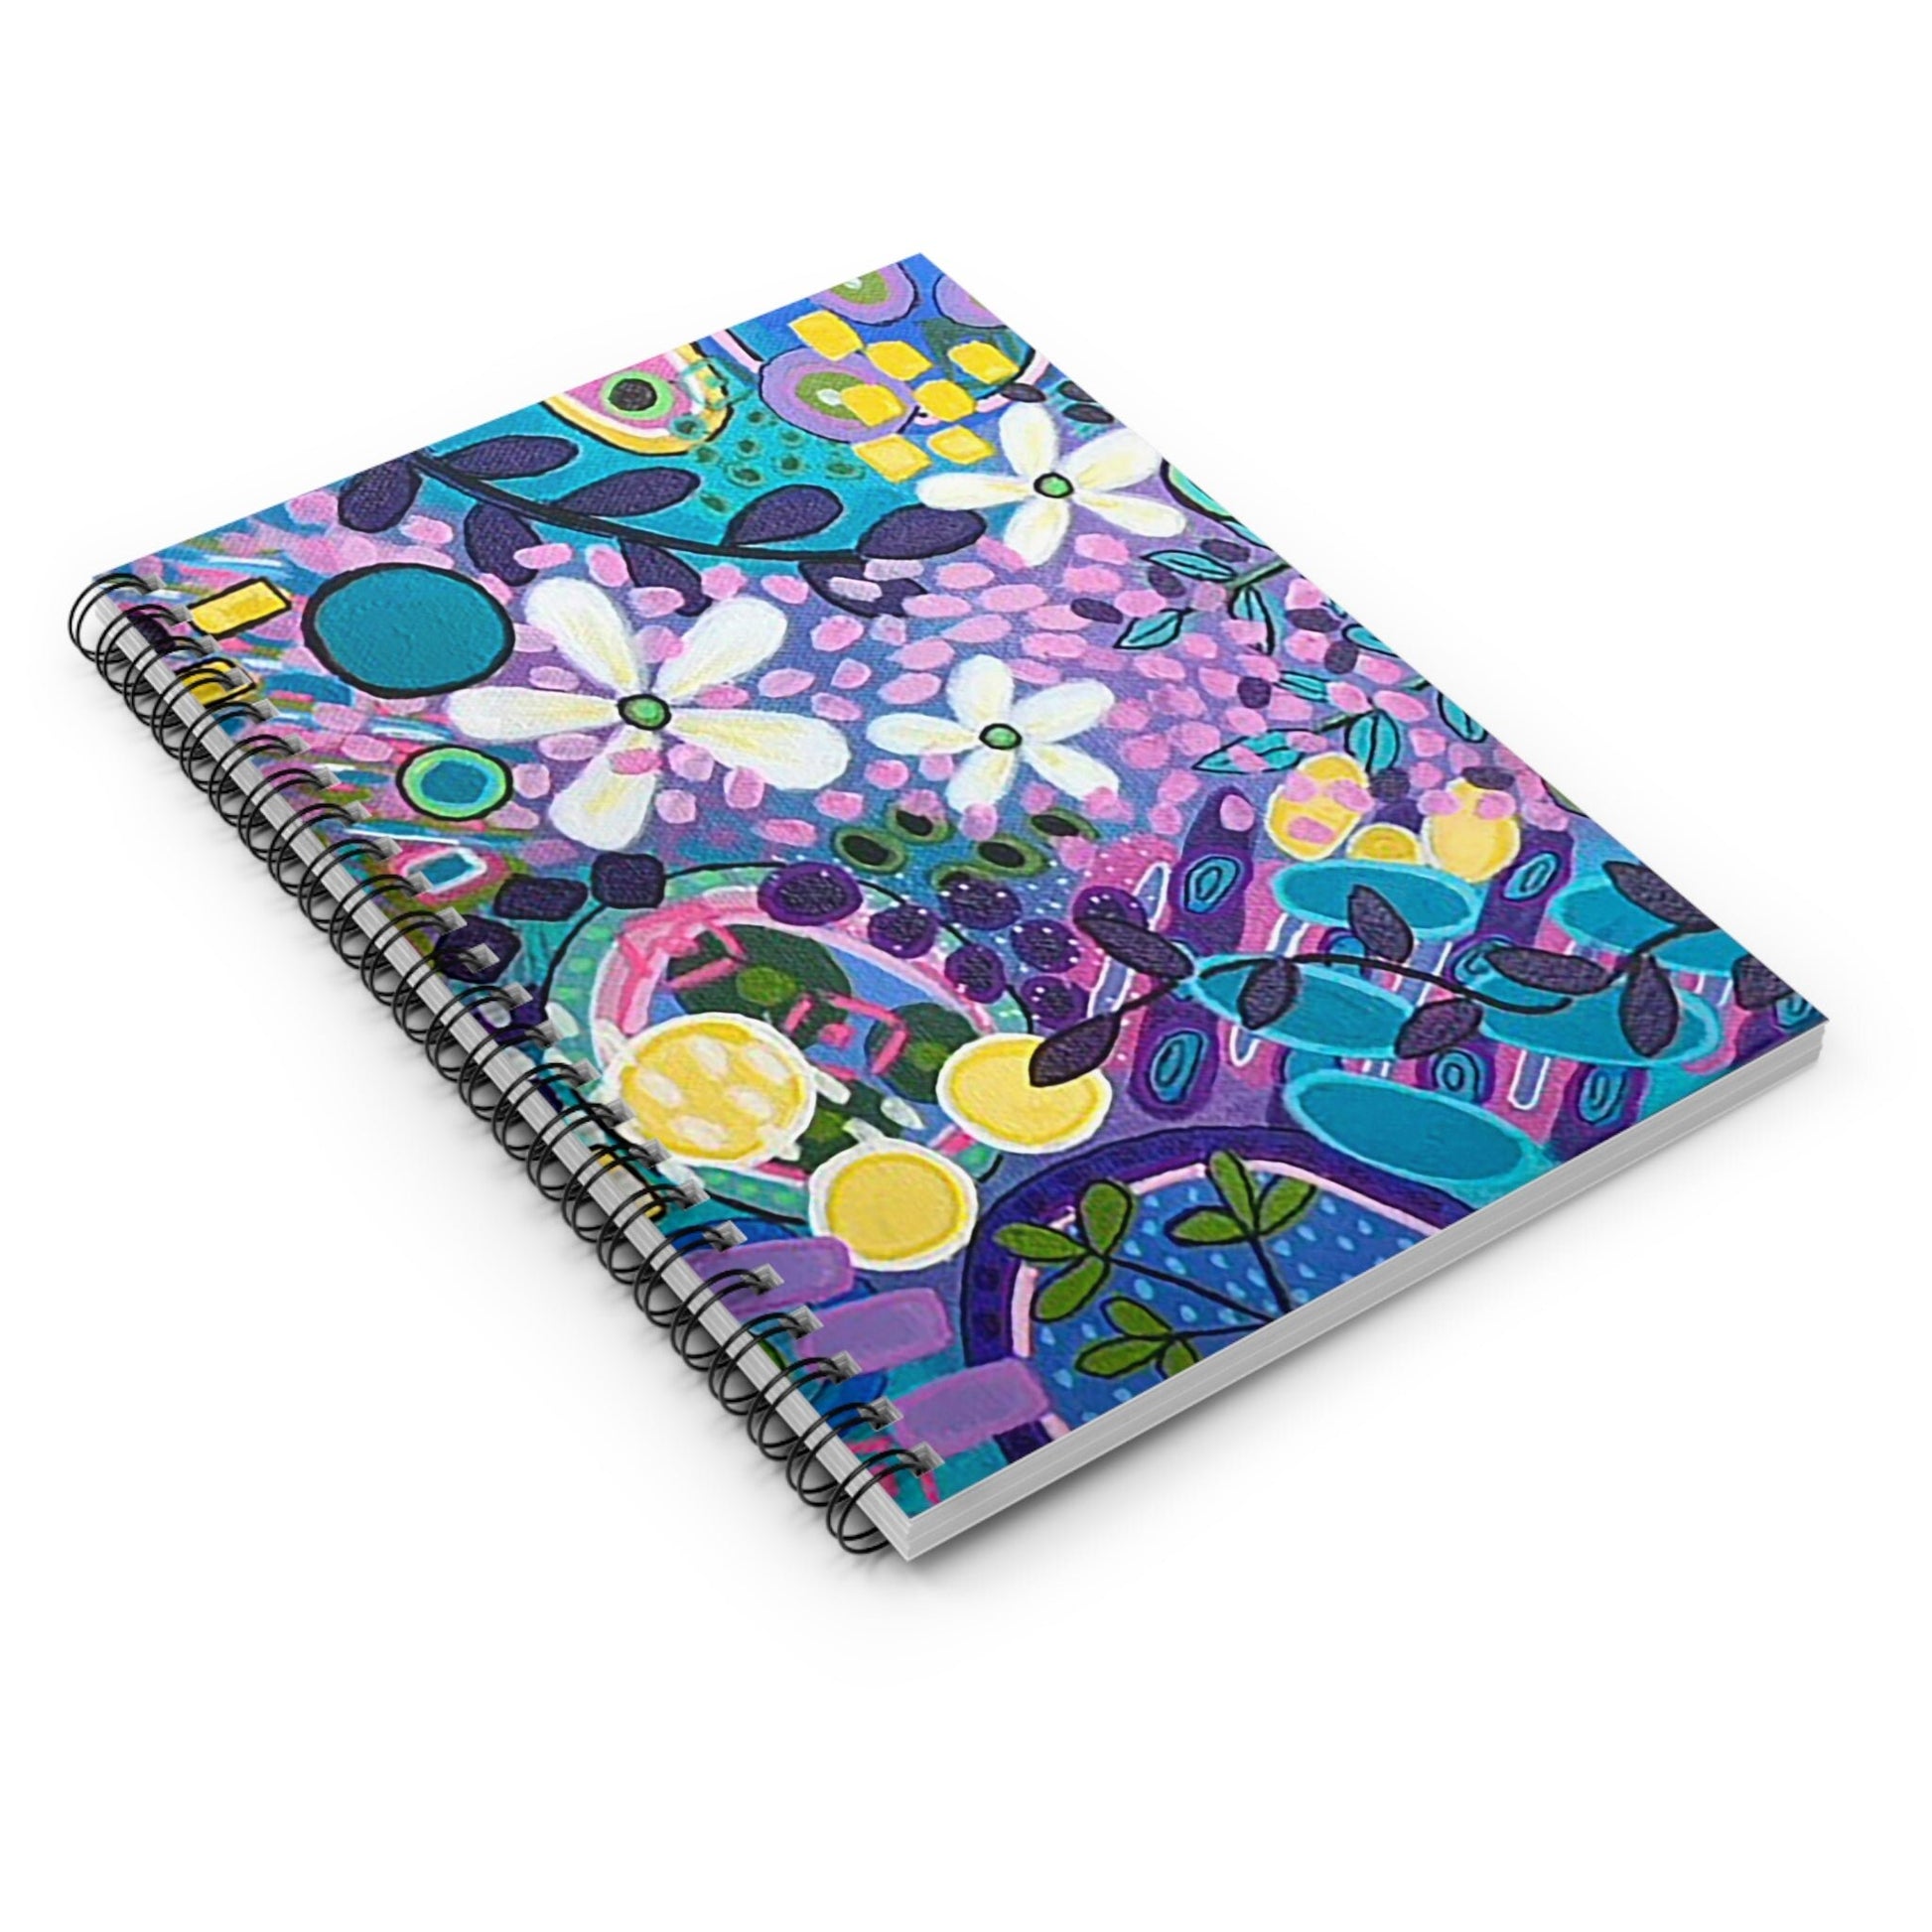 Daisy Crazy Spiral Notebook - Ruled Line